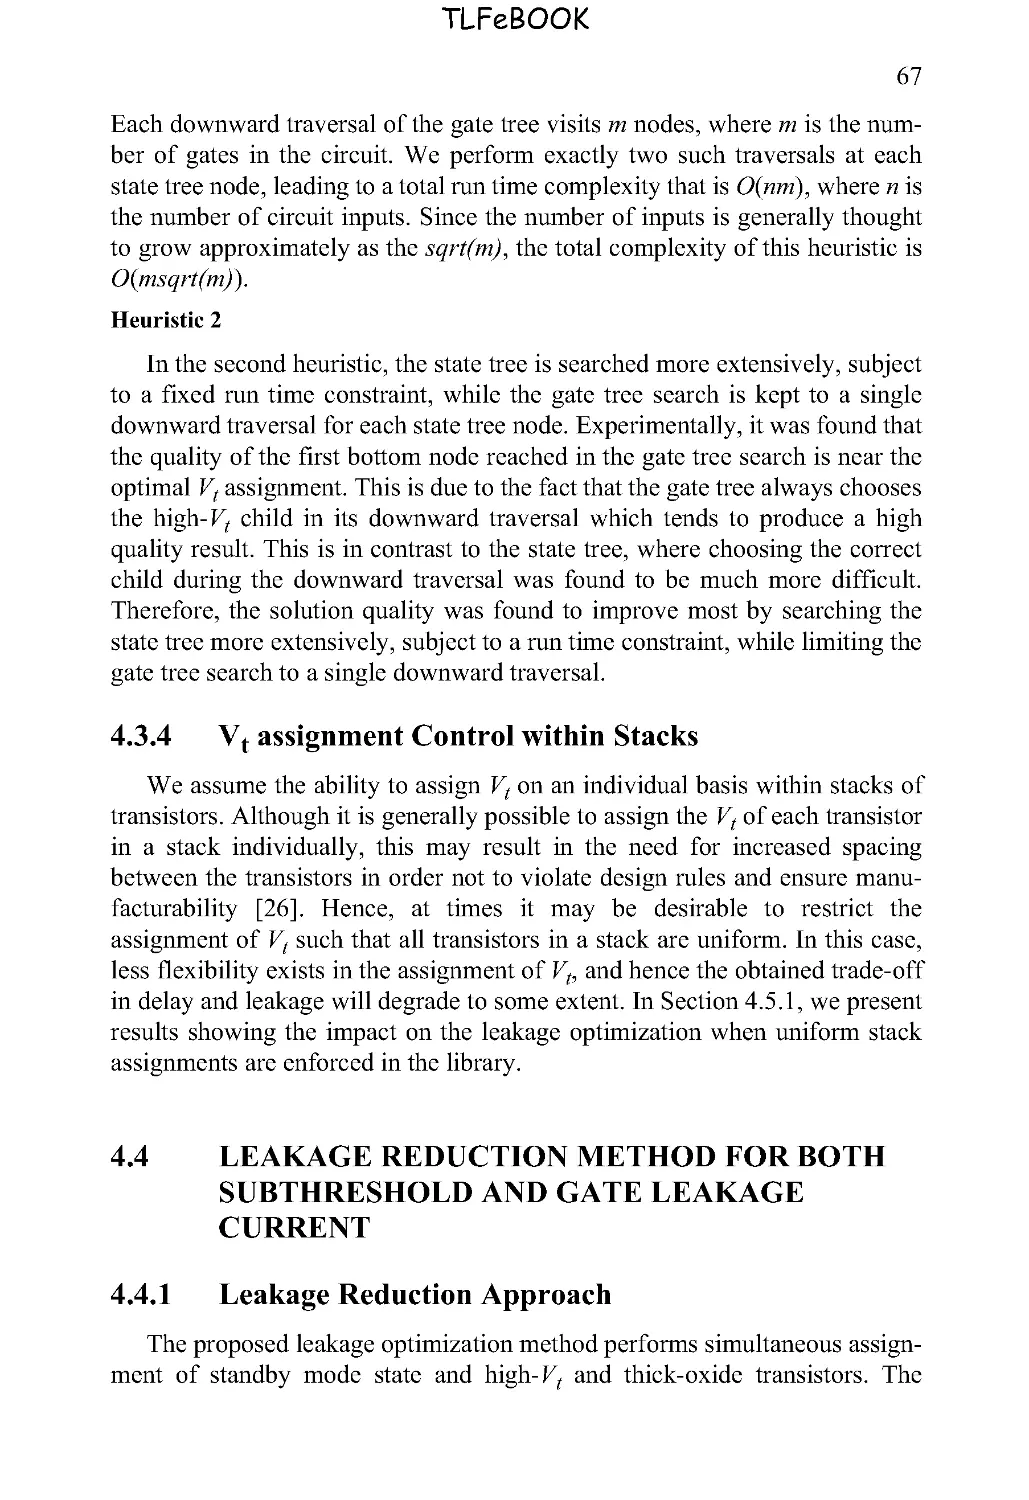 4.4 LEAKAGE REDUCTION METHOD FOR BOTH SUBTHRESHOLD AND GATE LEAKAGE CURRENT